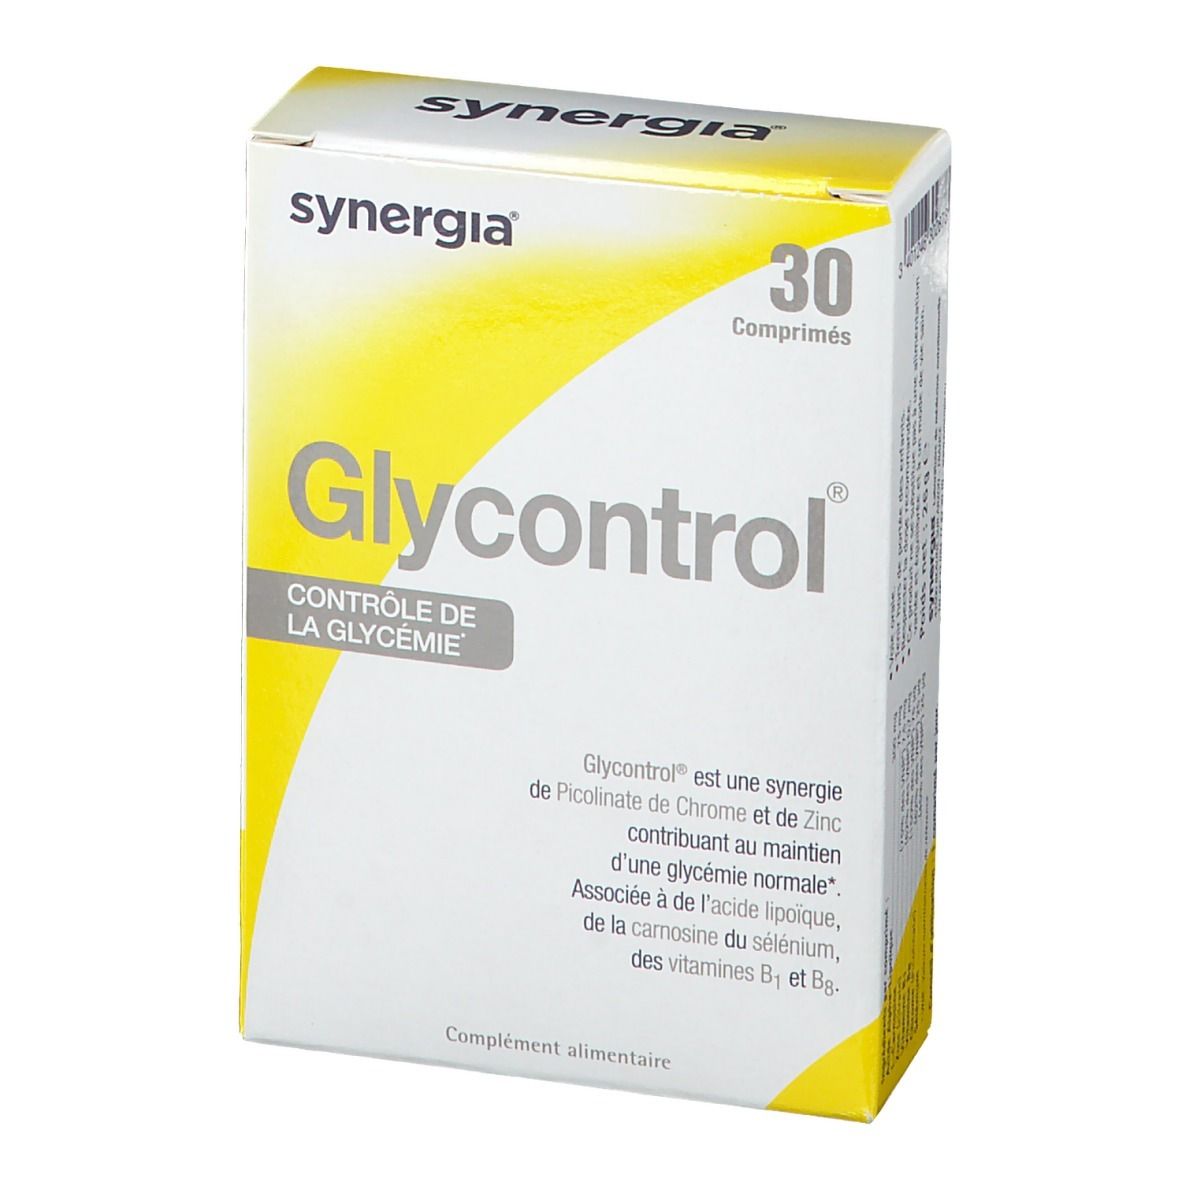 Synergia Glycontrol®